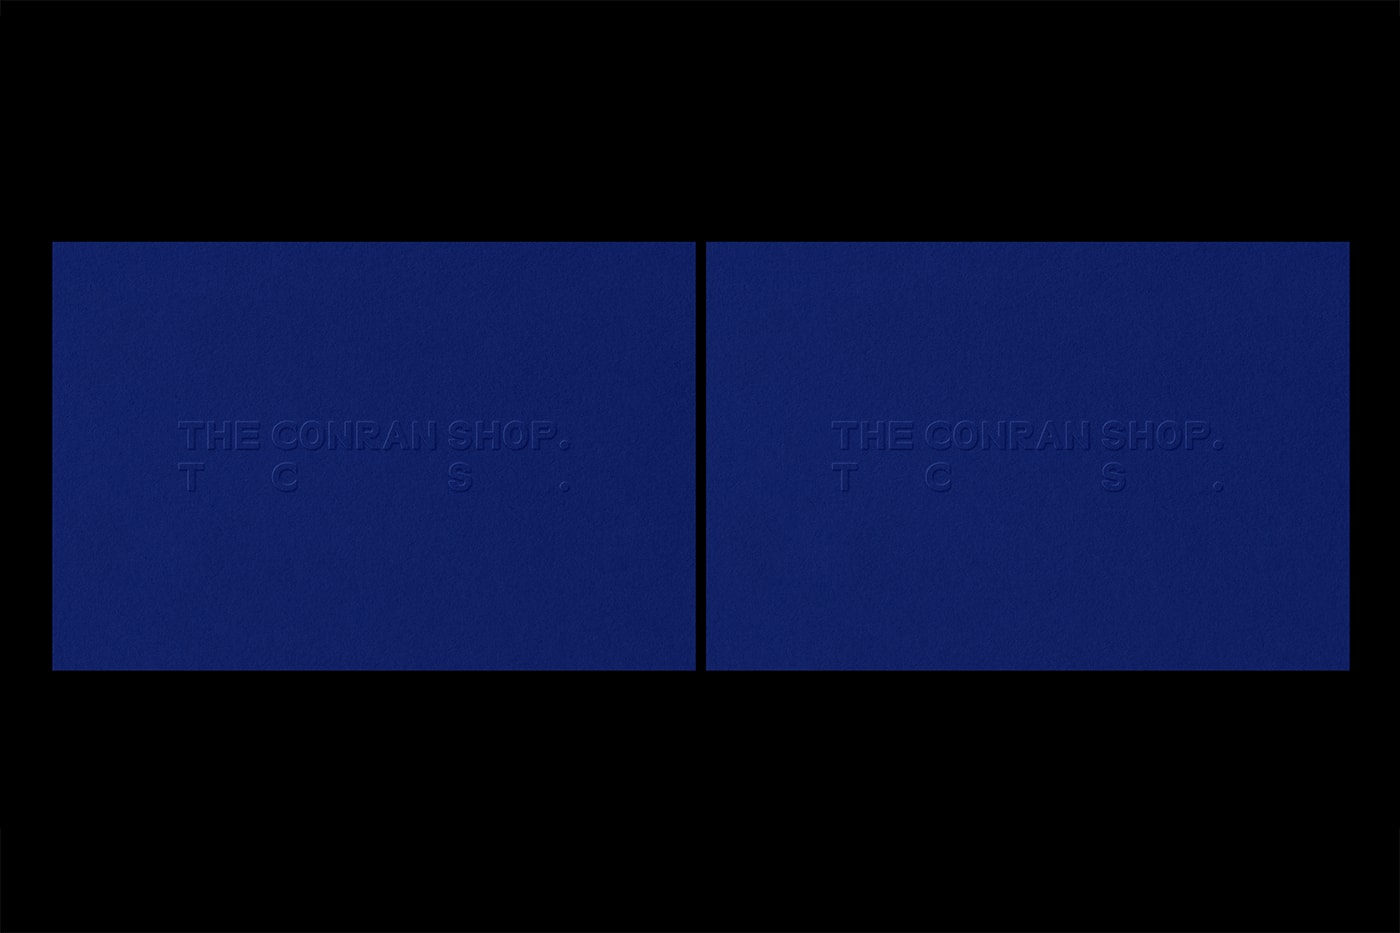 The Conran Shop Reveals New Brand Identity Designed by Pentagram